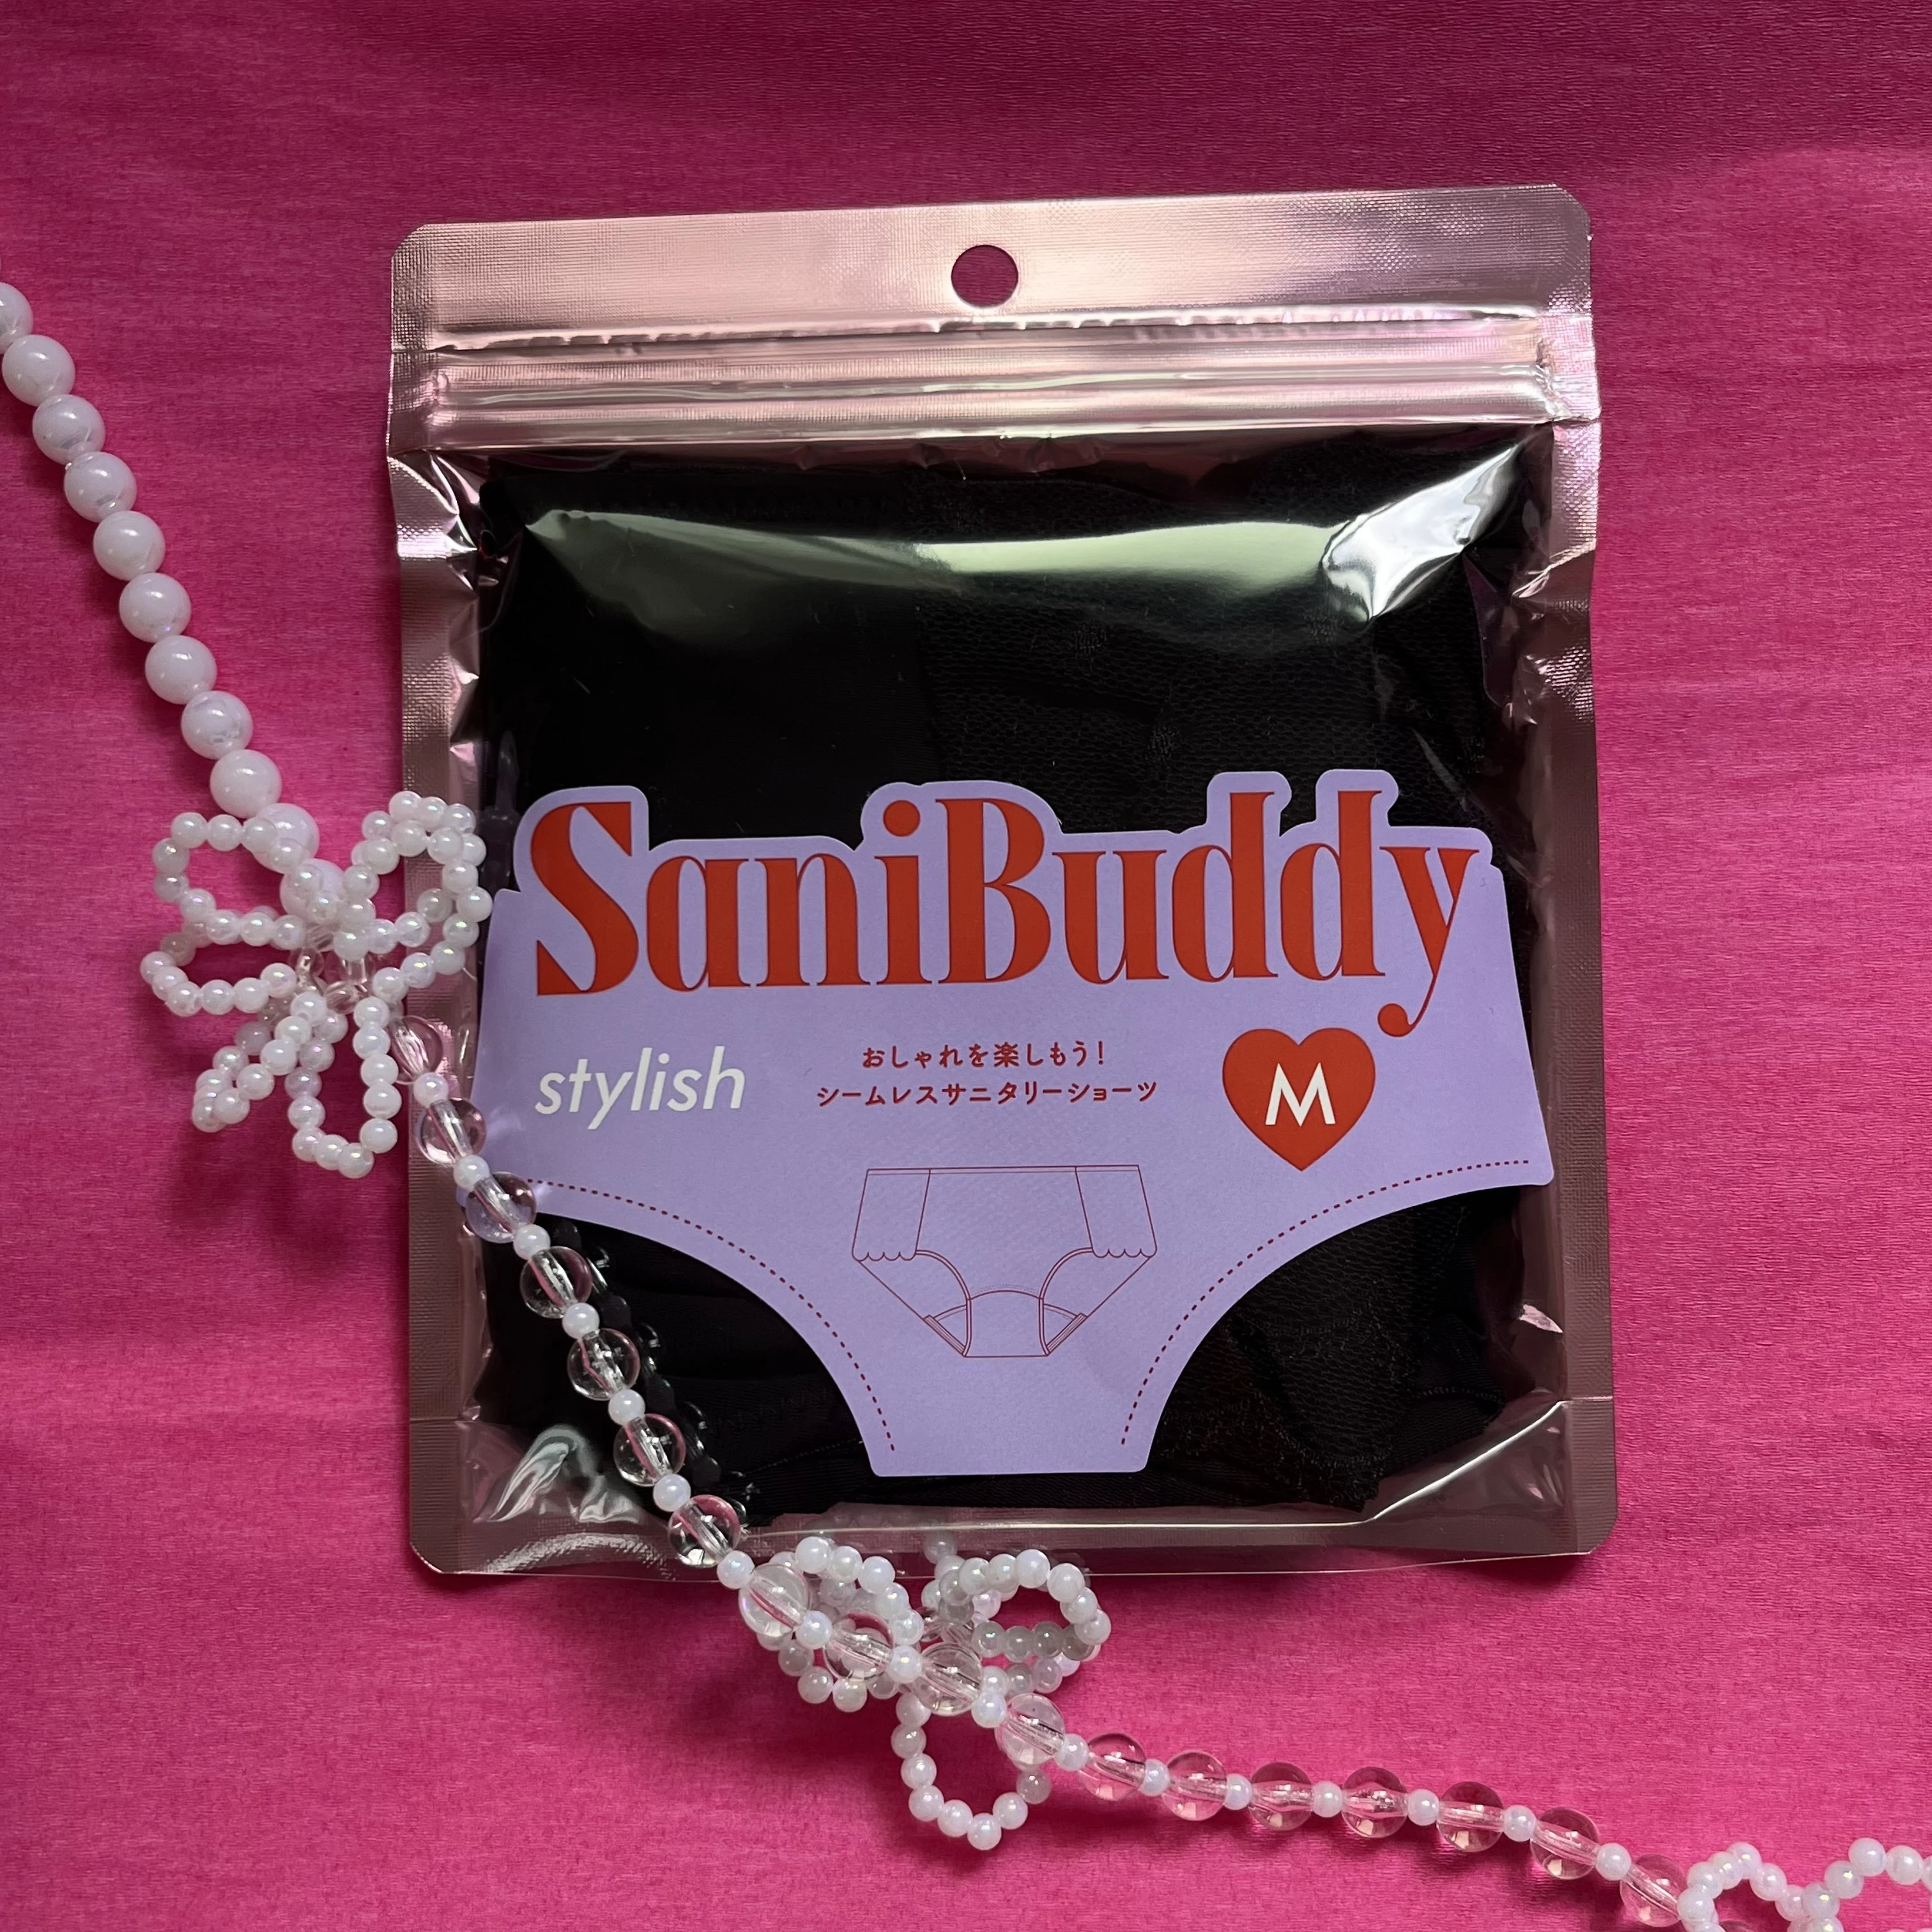 SaniBuddy「stylish」のパッケージ